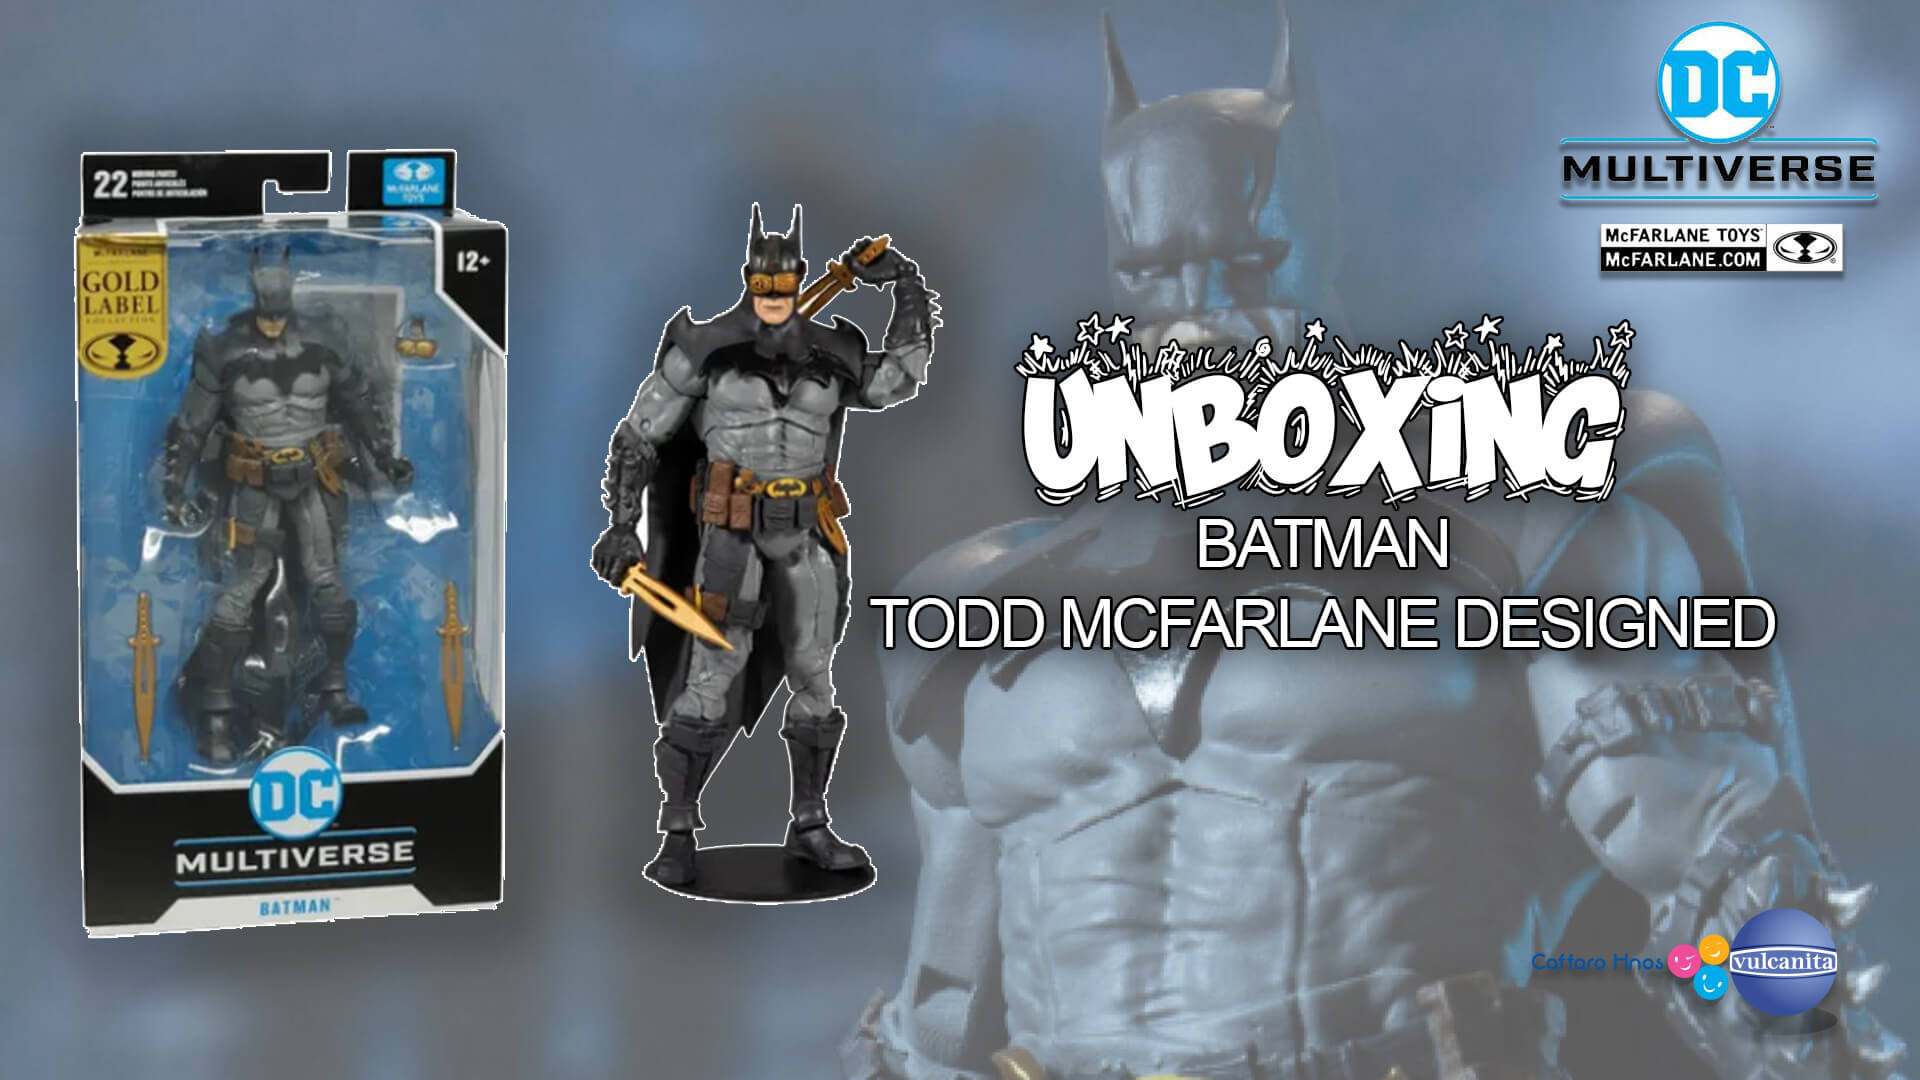 UNBOXING: Batman Todd McFarlane designed